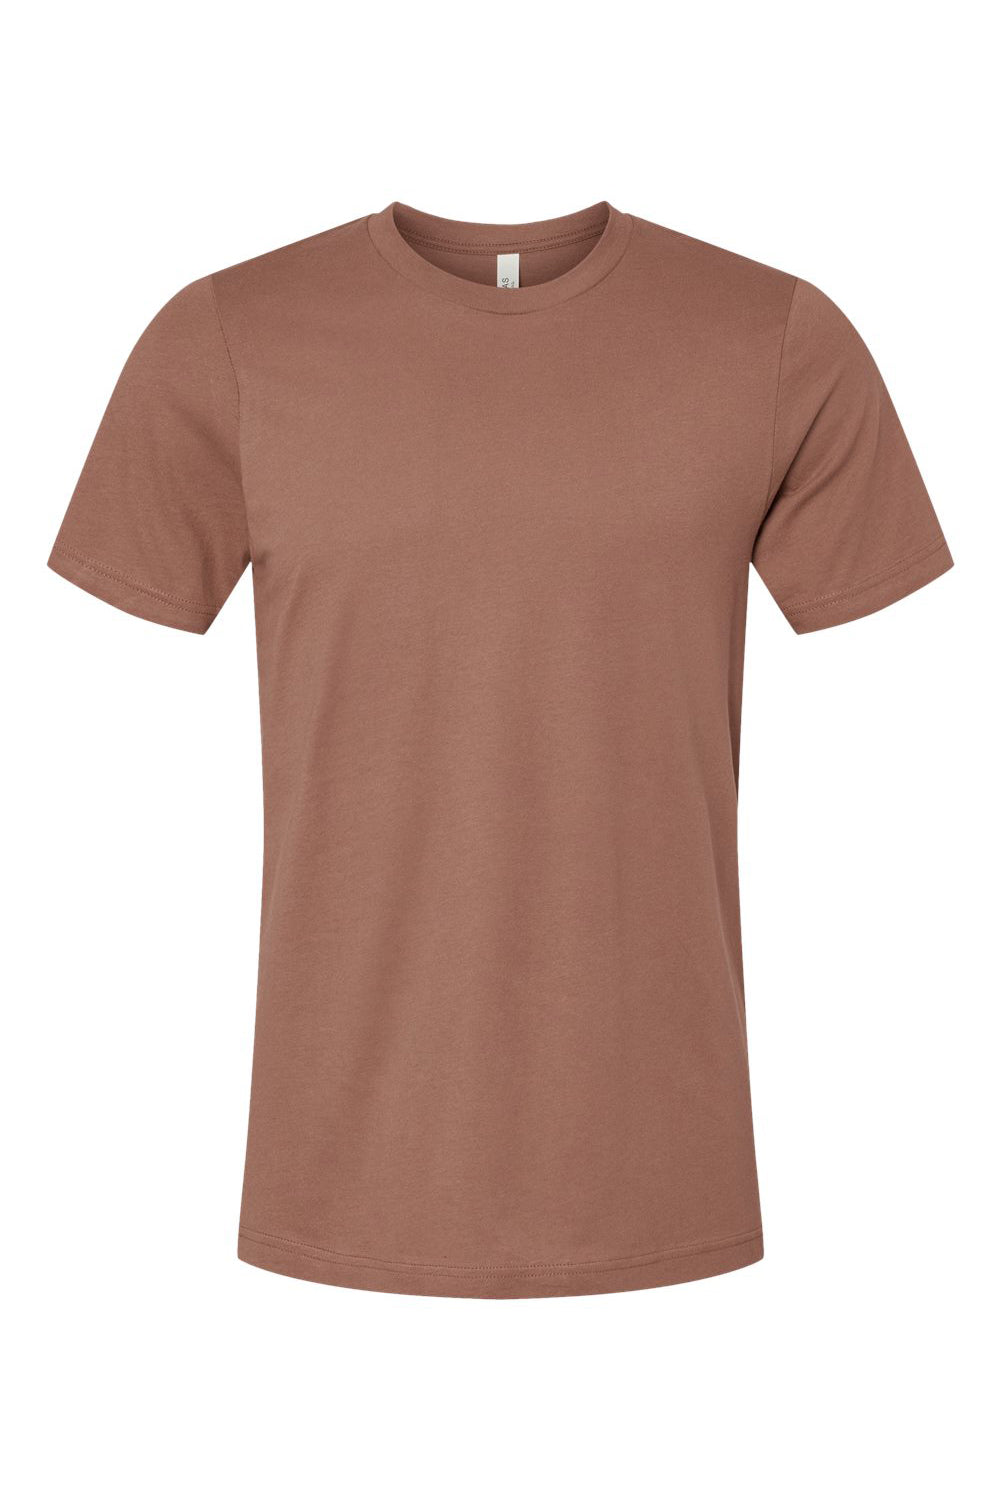 Bella + Canvas BC3001/3001C Mens Jersey Short Sleeve Crewneck T-Shirt Chestnut Brown Flat Front